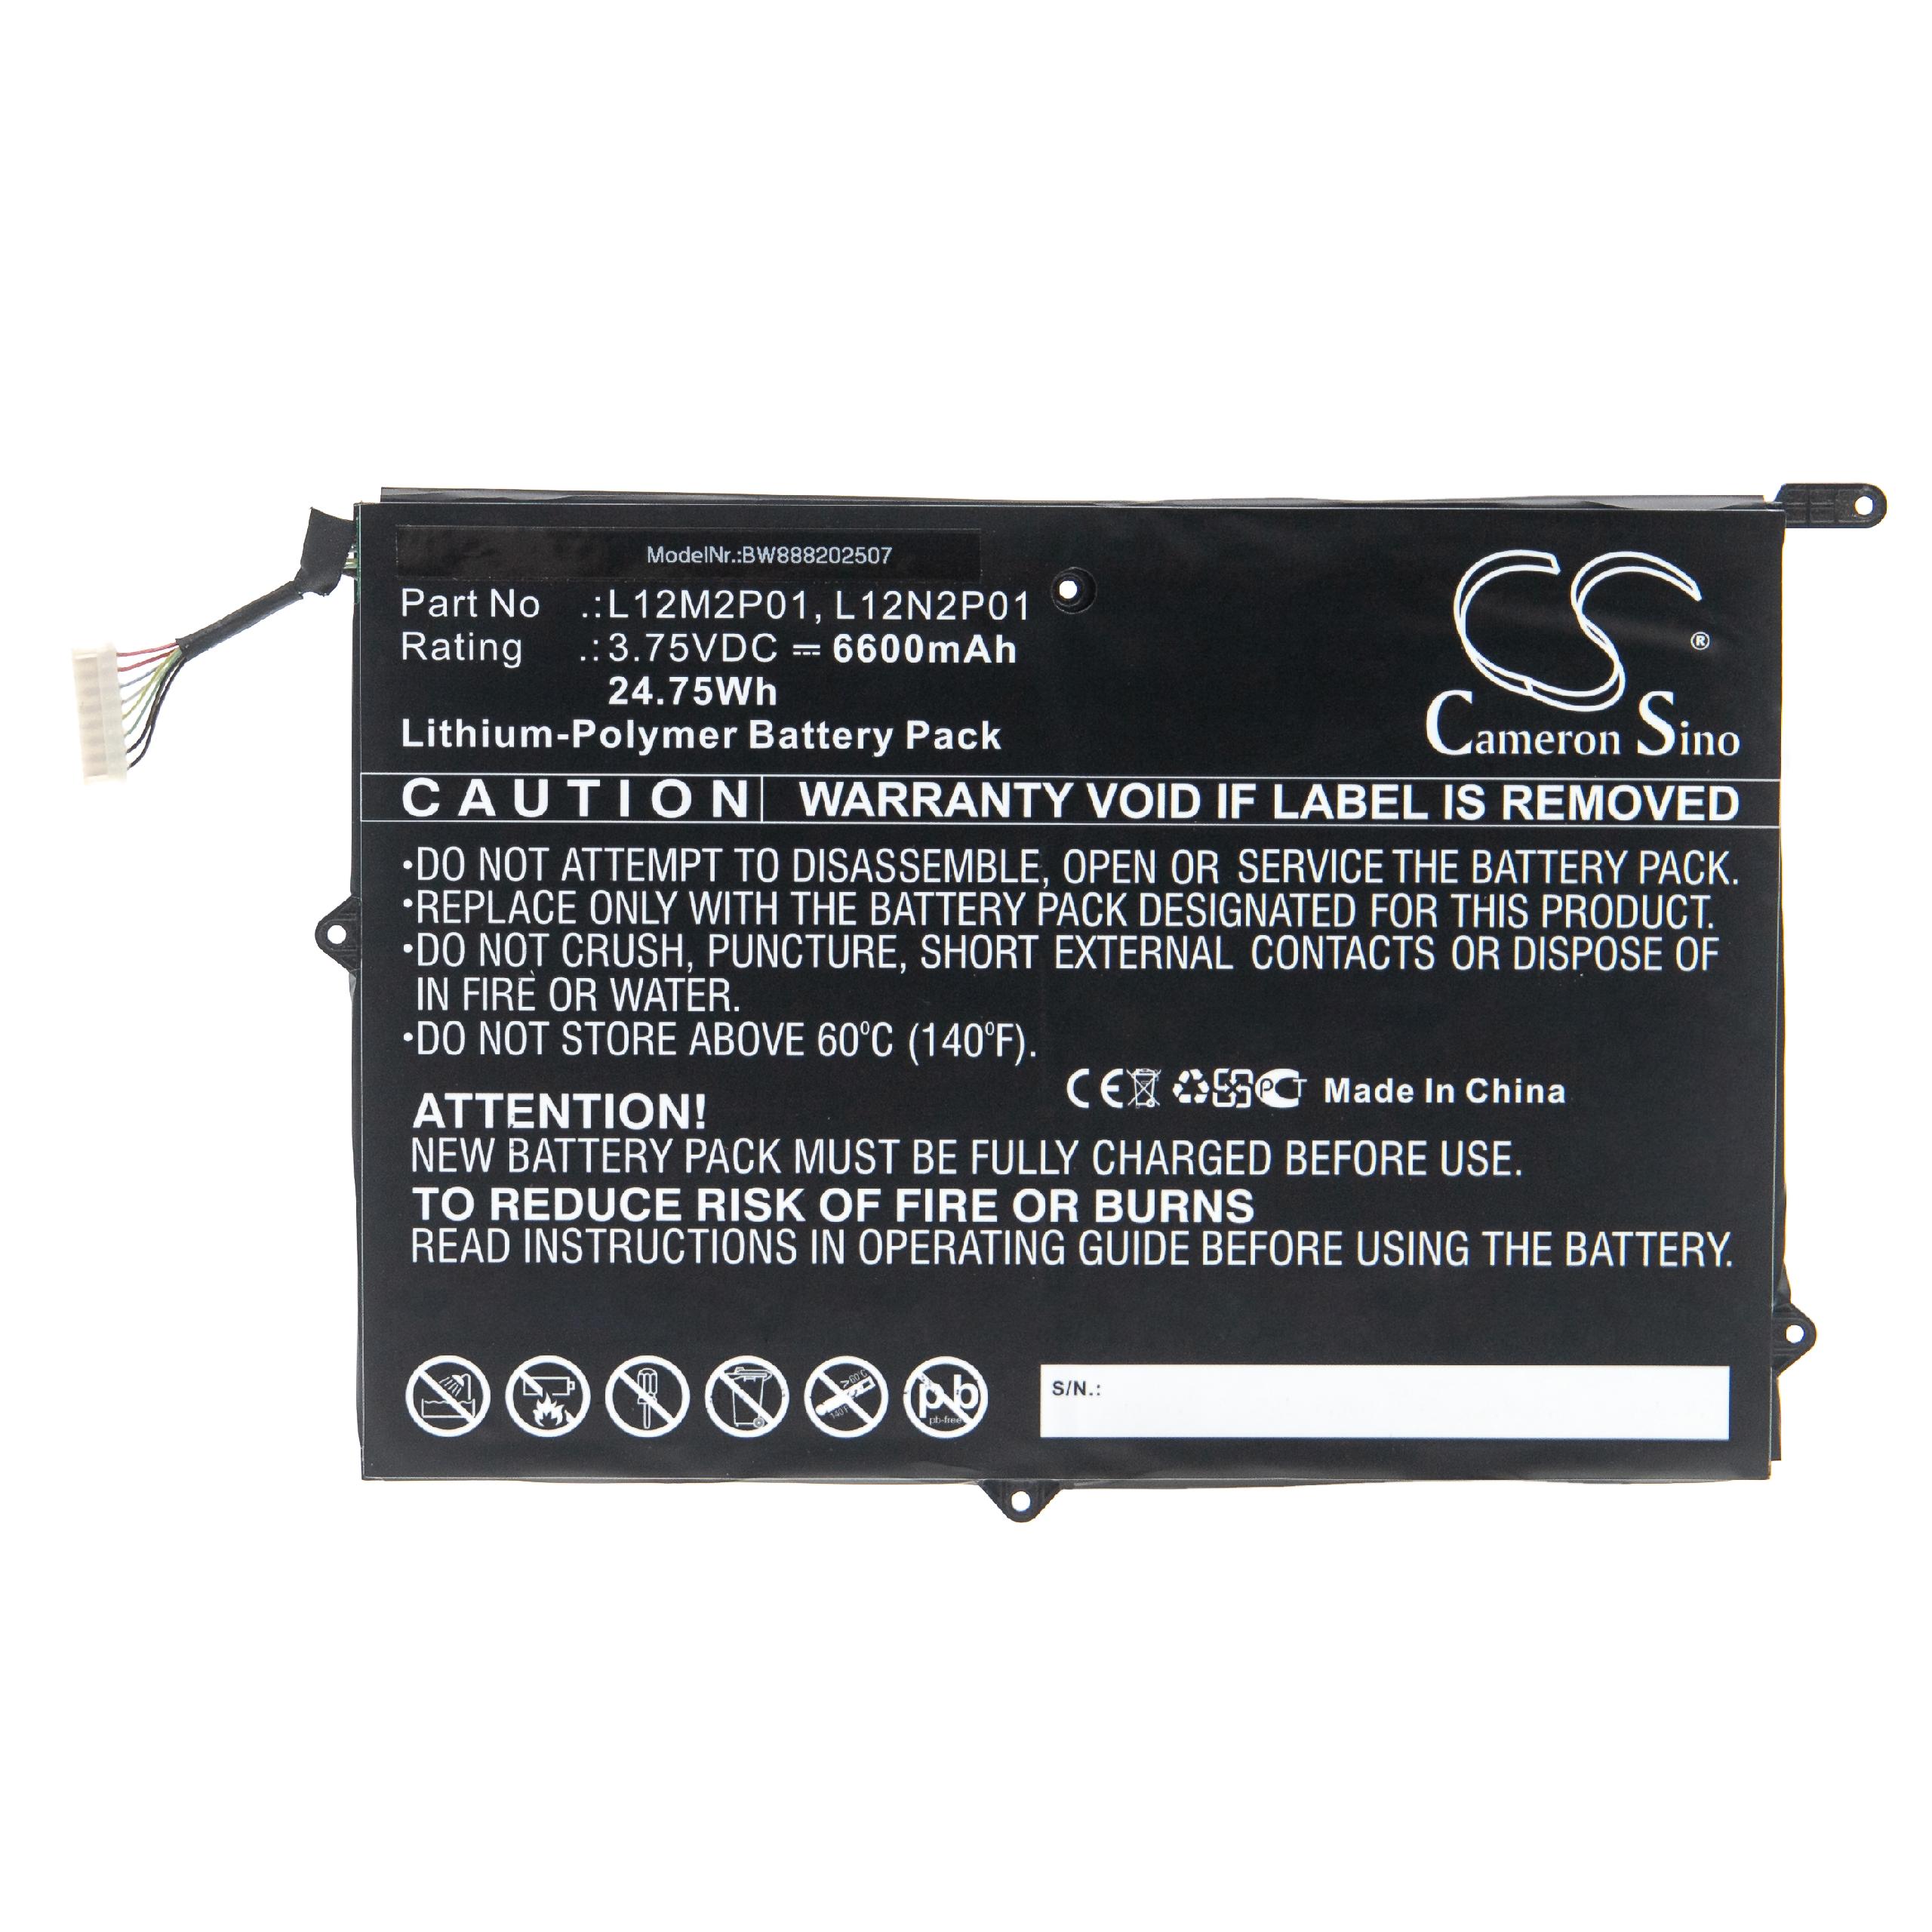 Akumulator zamiennik Lenovo L12M2P01, 1ICP4/83/102-2, 1ICP4/83/103-2, 121500184 - 6600 mAh 3,75 V LiPo